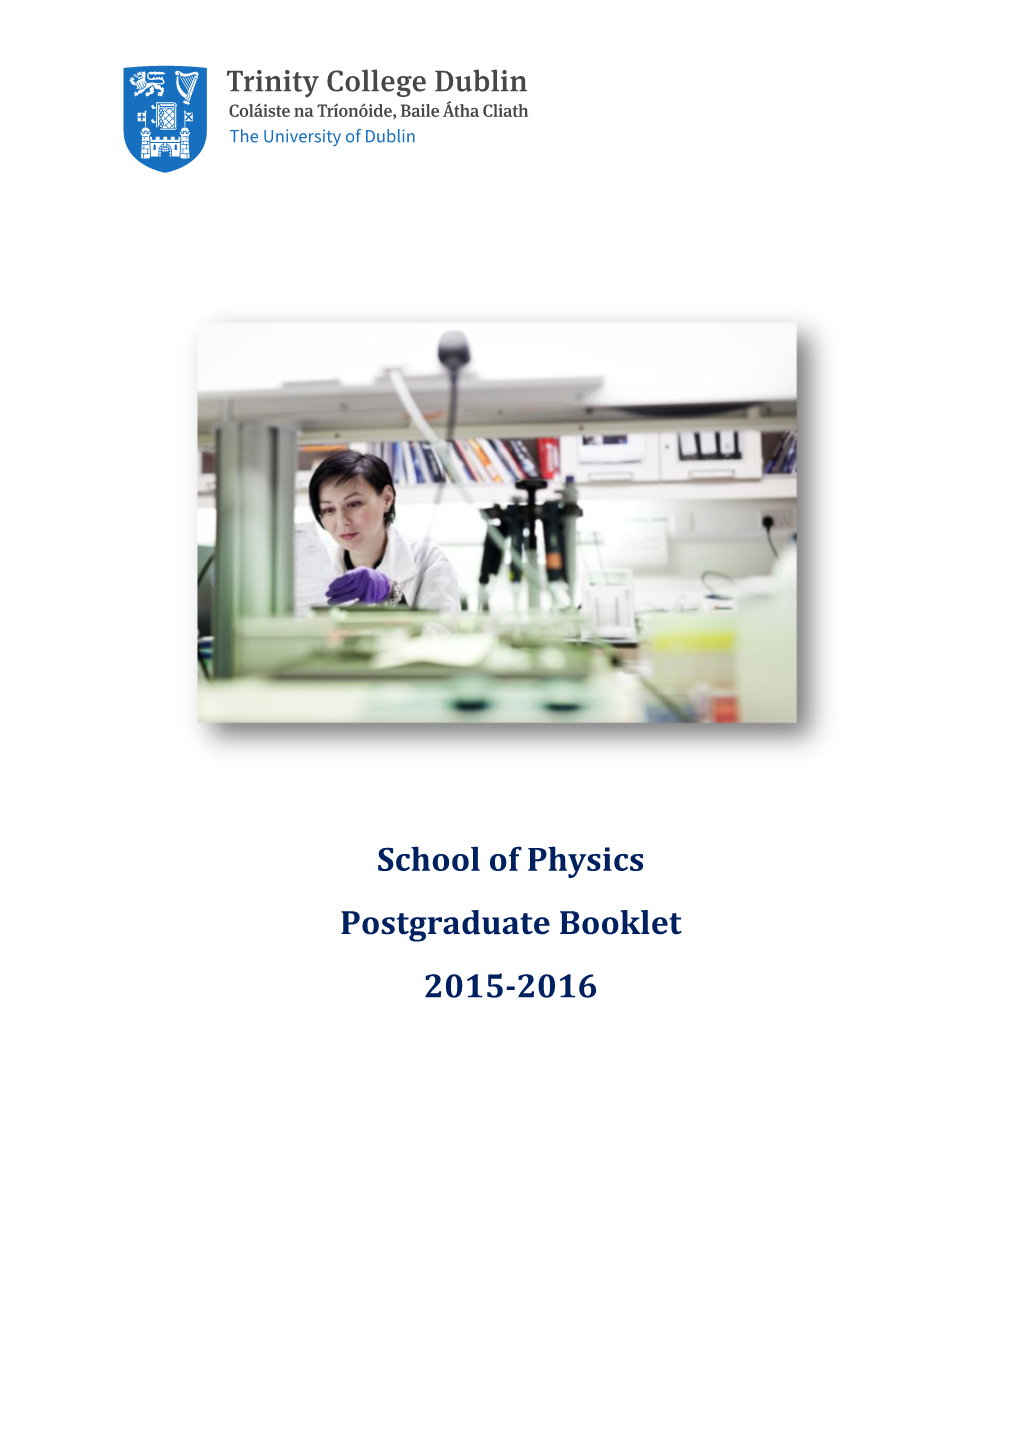 School of Physics Postgraduate Booklet 2015-2016